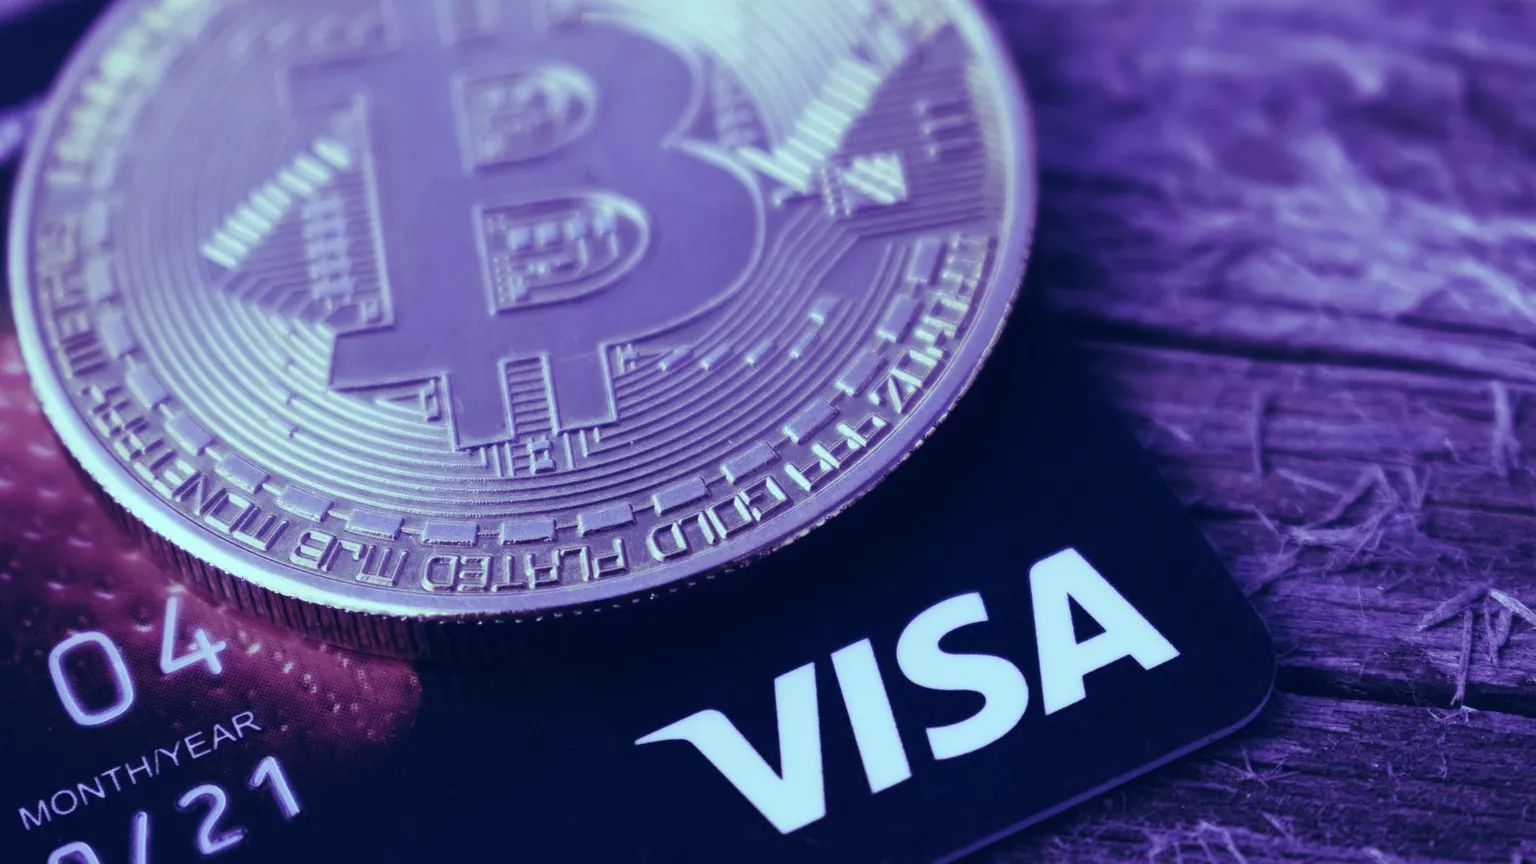 Visa and Bitcoin. Image: Shutterstock